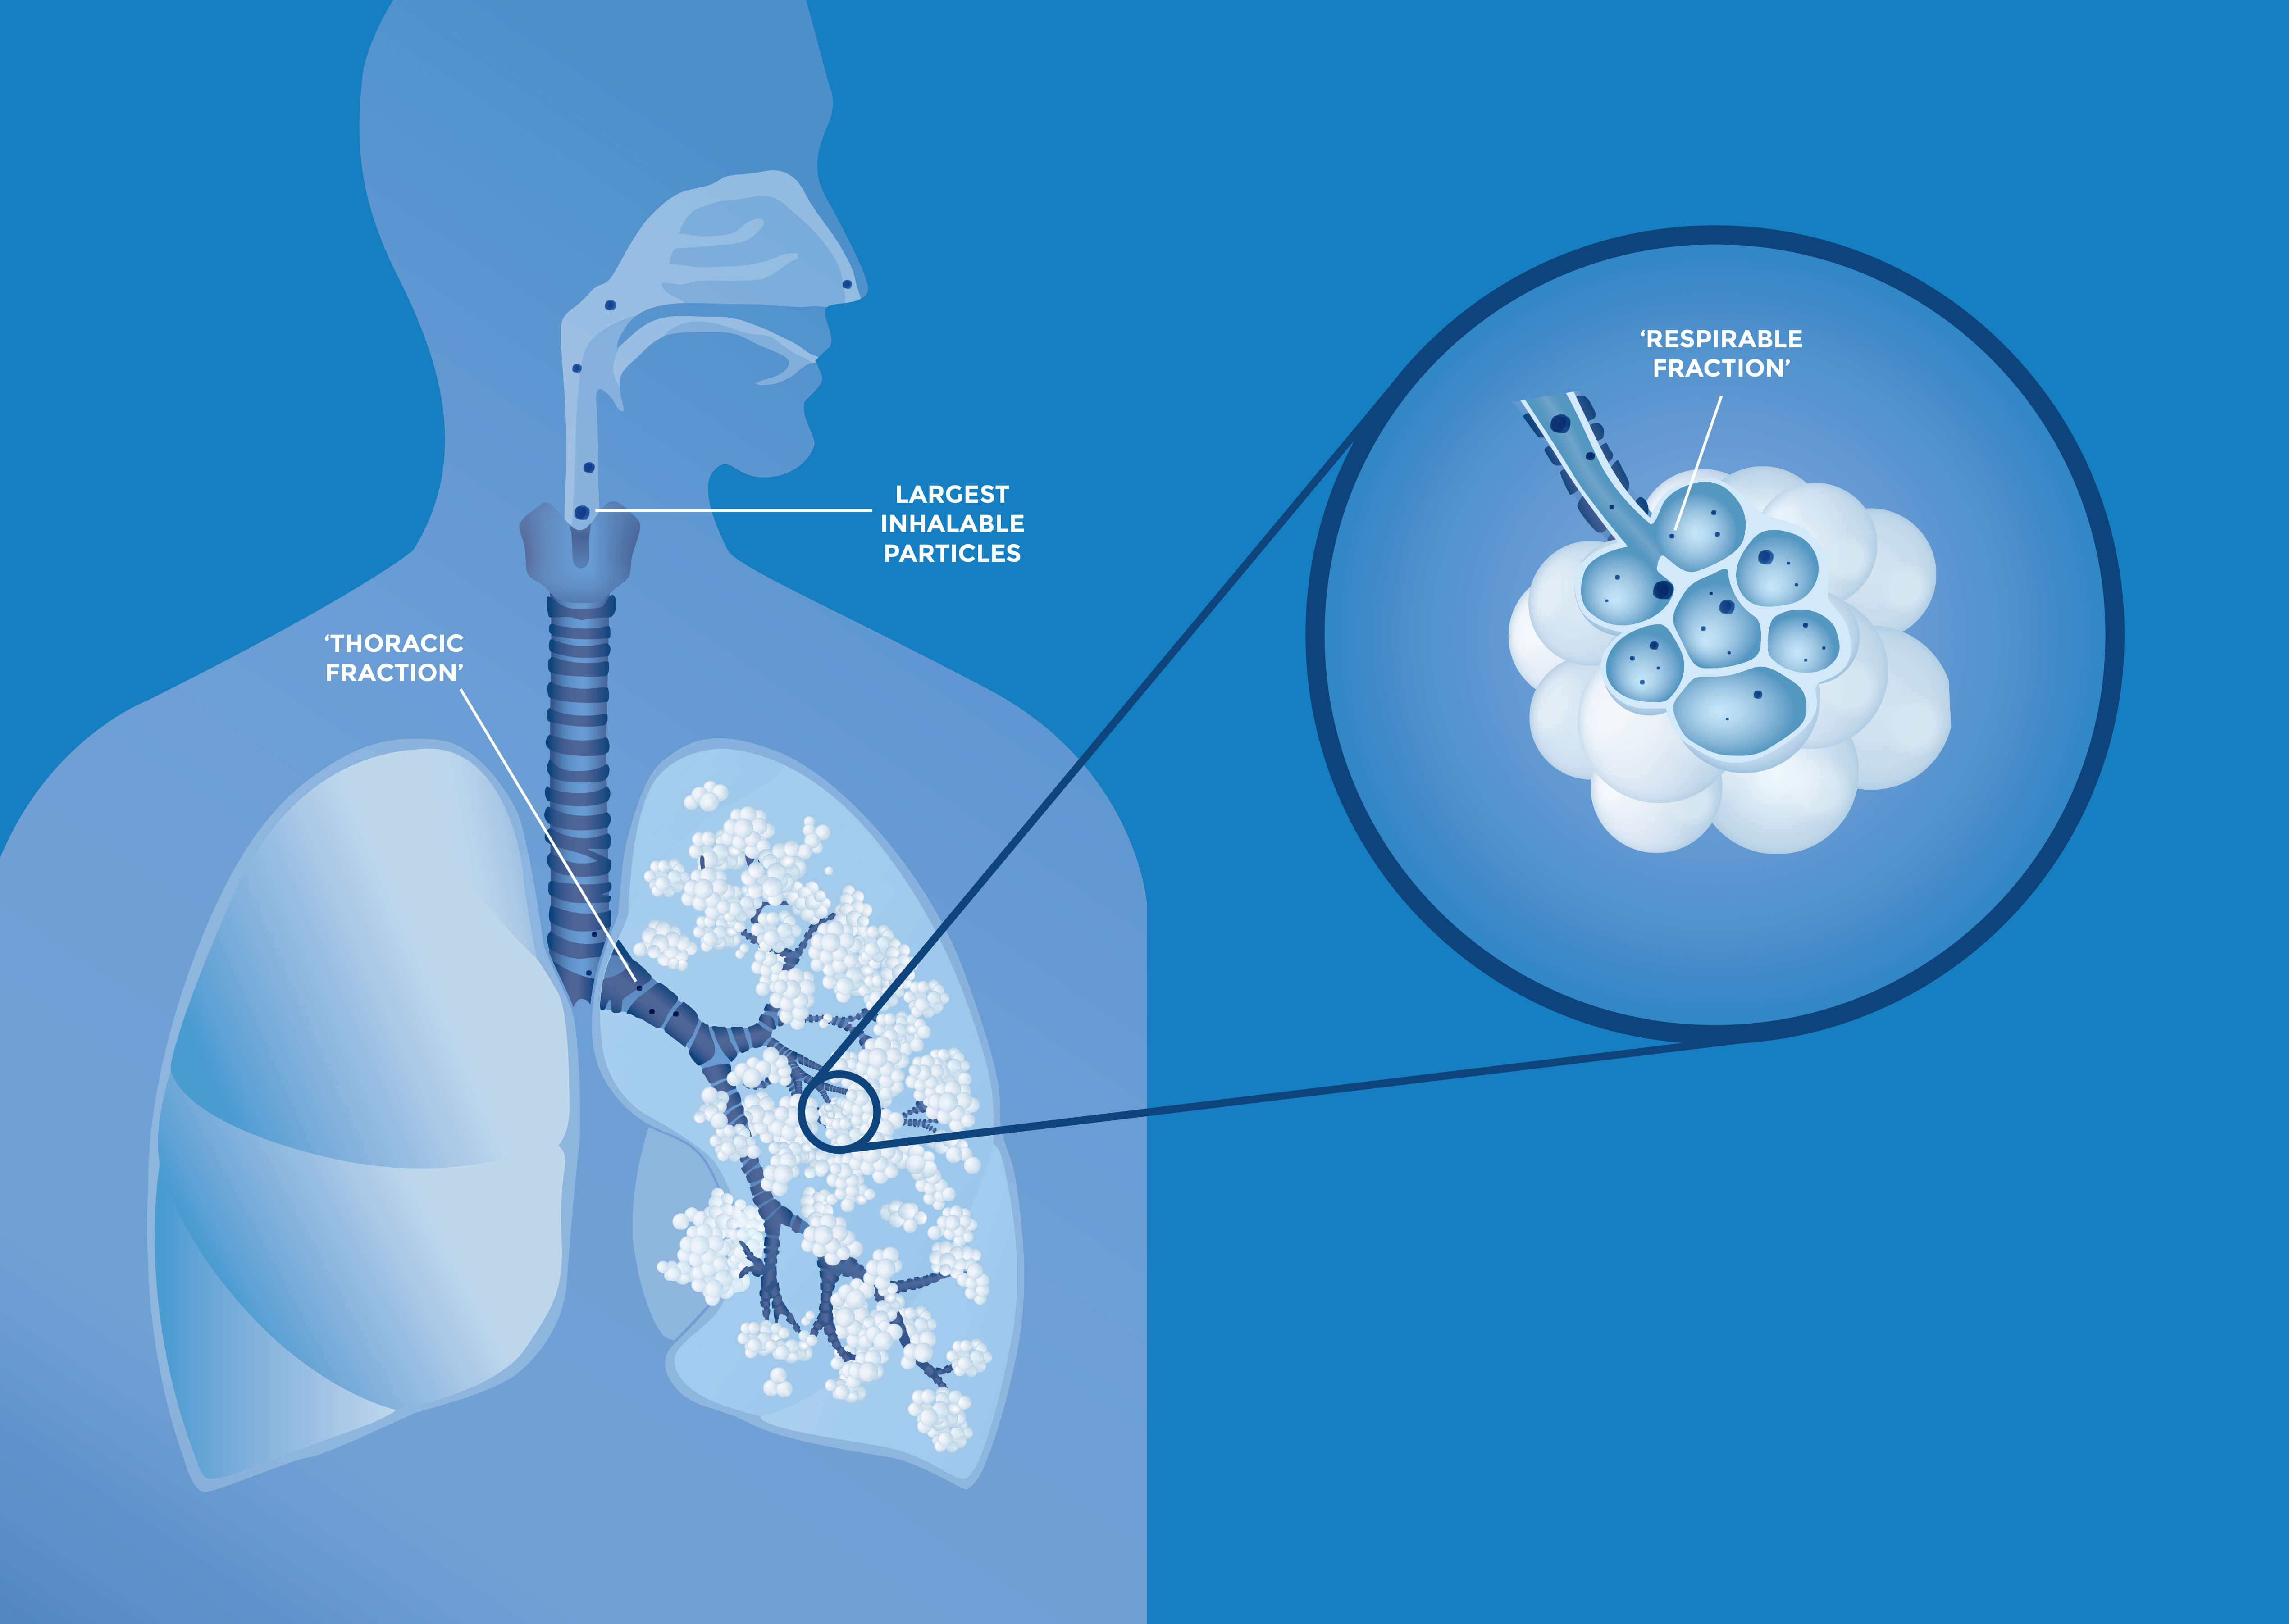 https://safesilica.eu/wp-content/uploads/2018/09/IMA-Lungs-illustration3-compressed.jpg